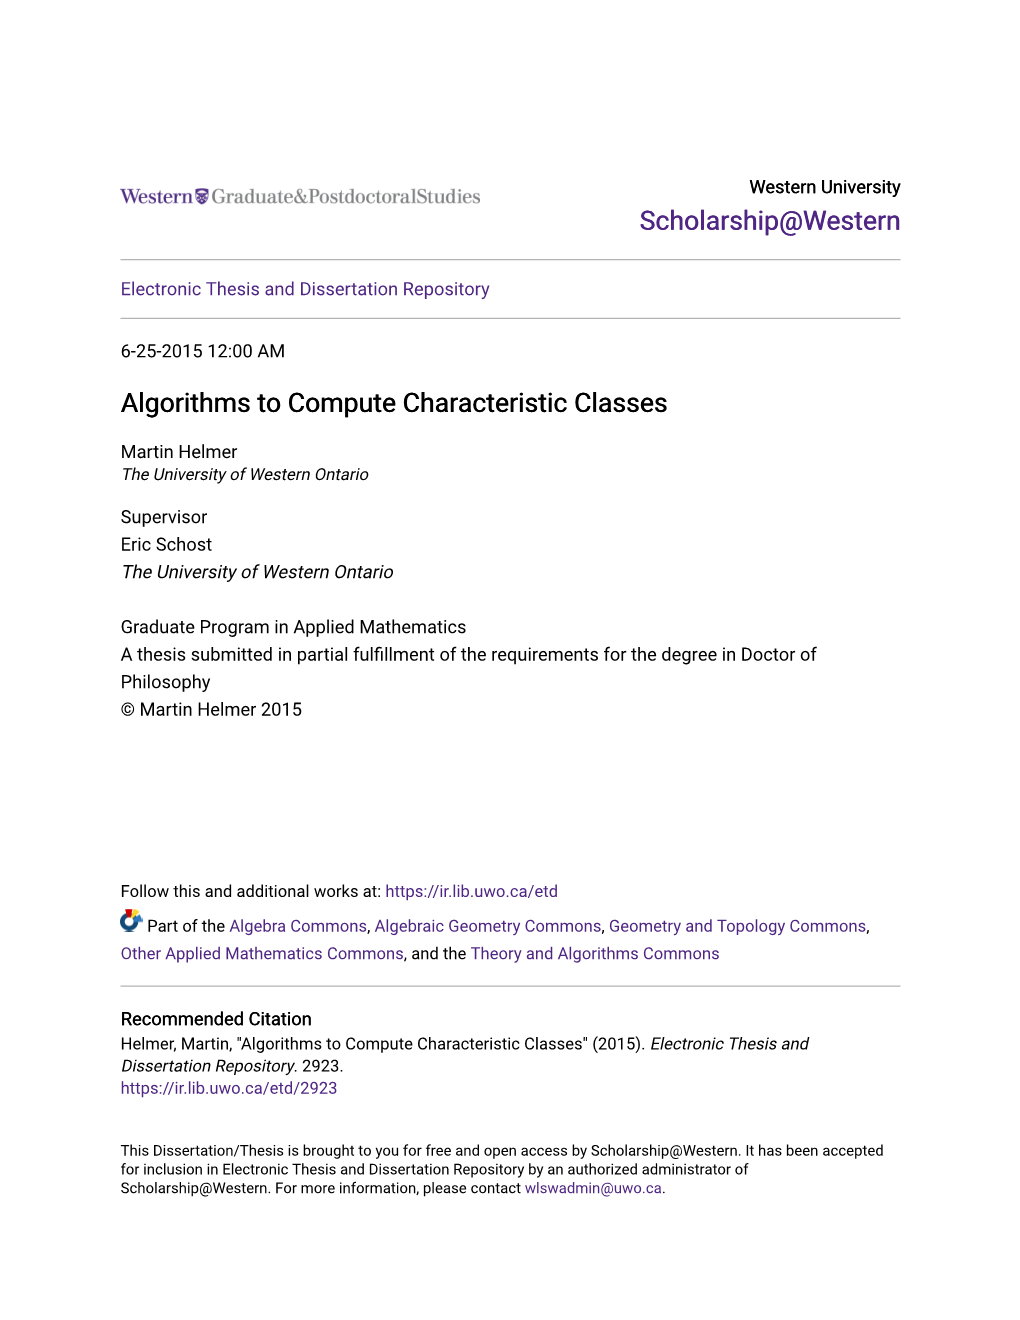 Algorithms to Compute Characteristic Classes